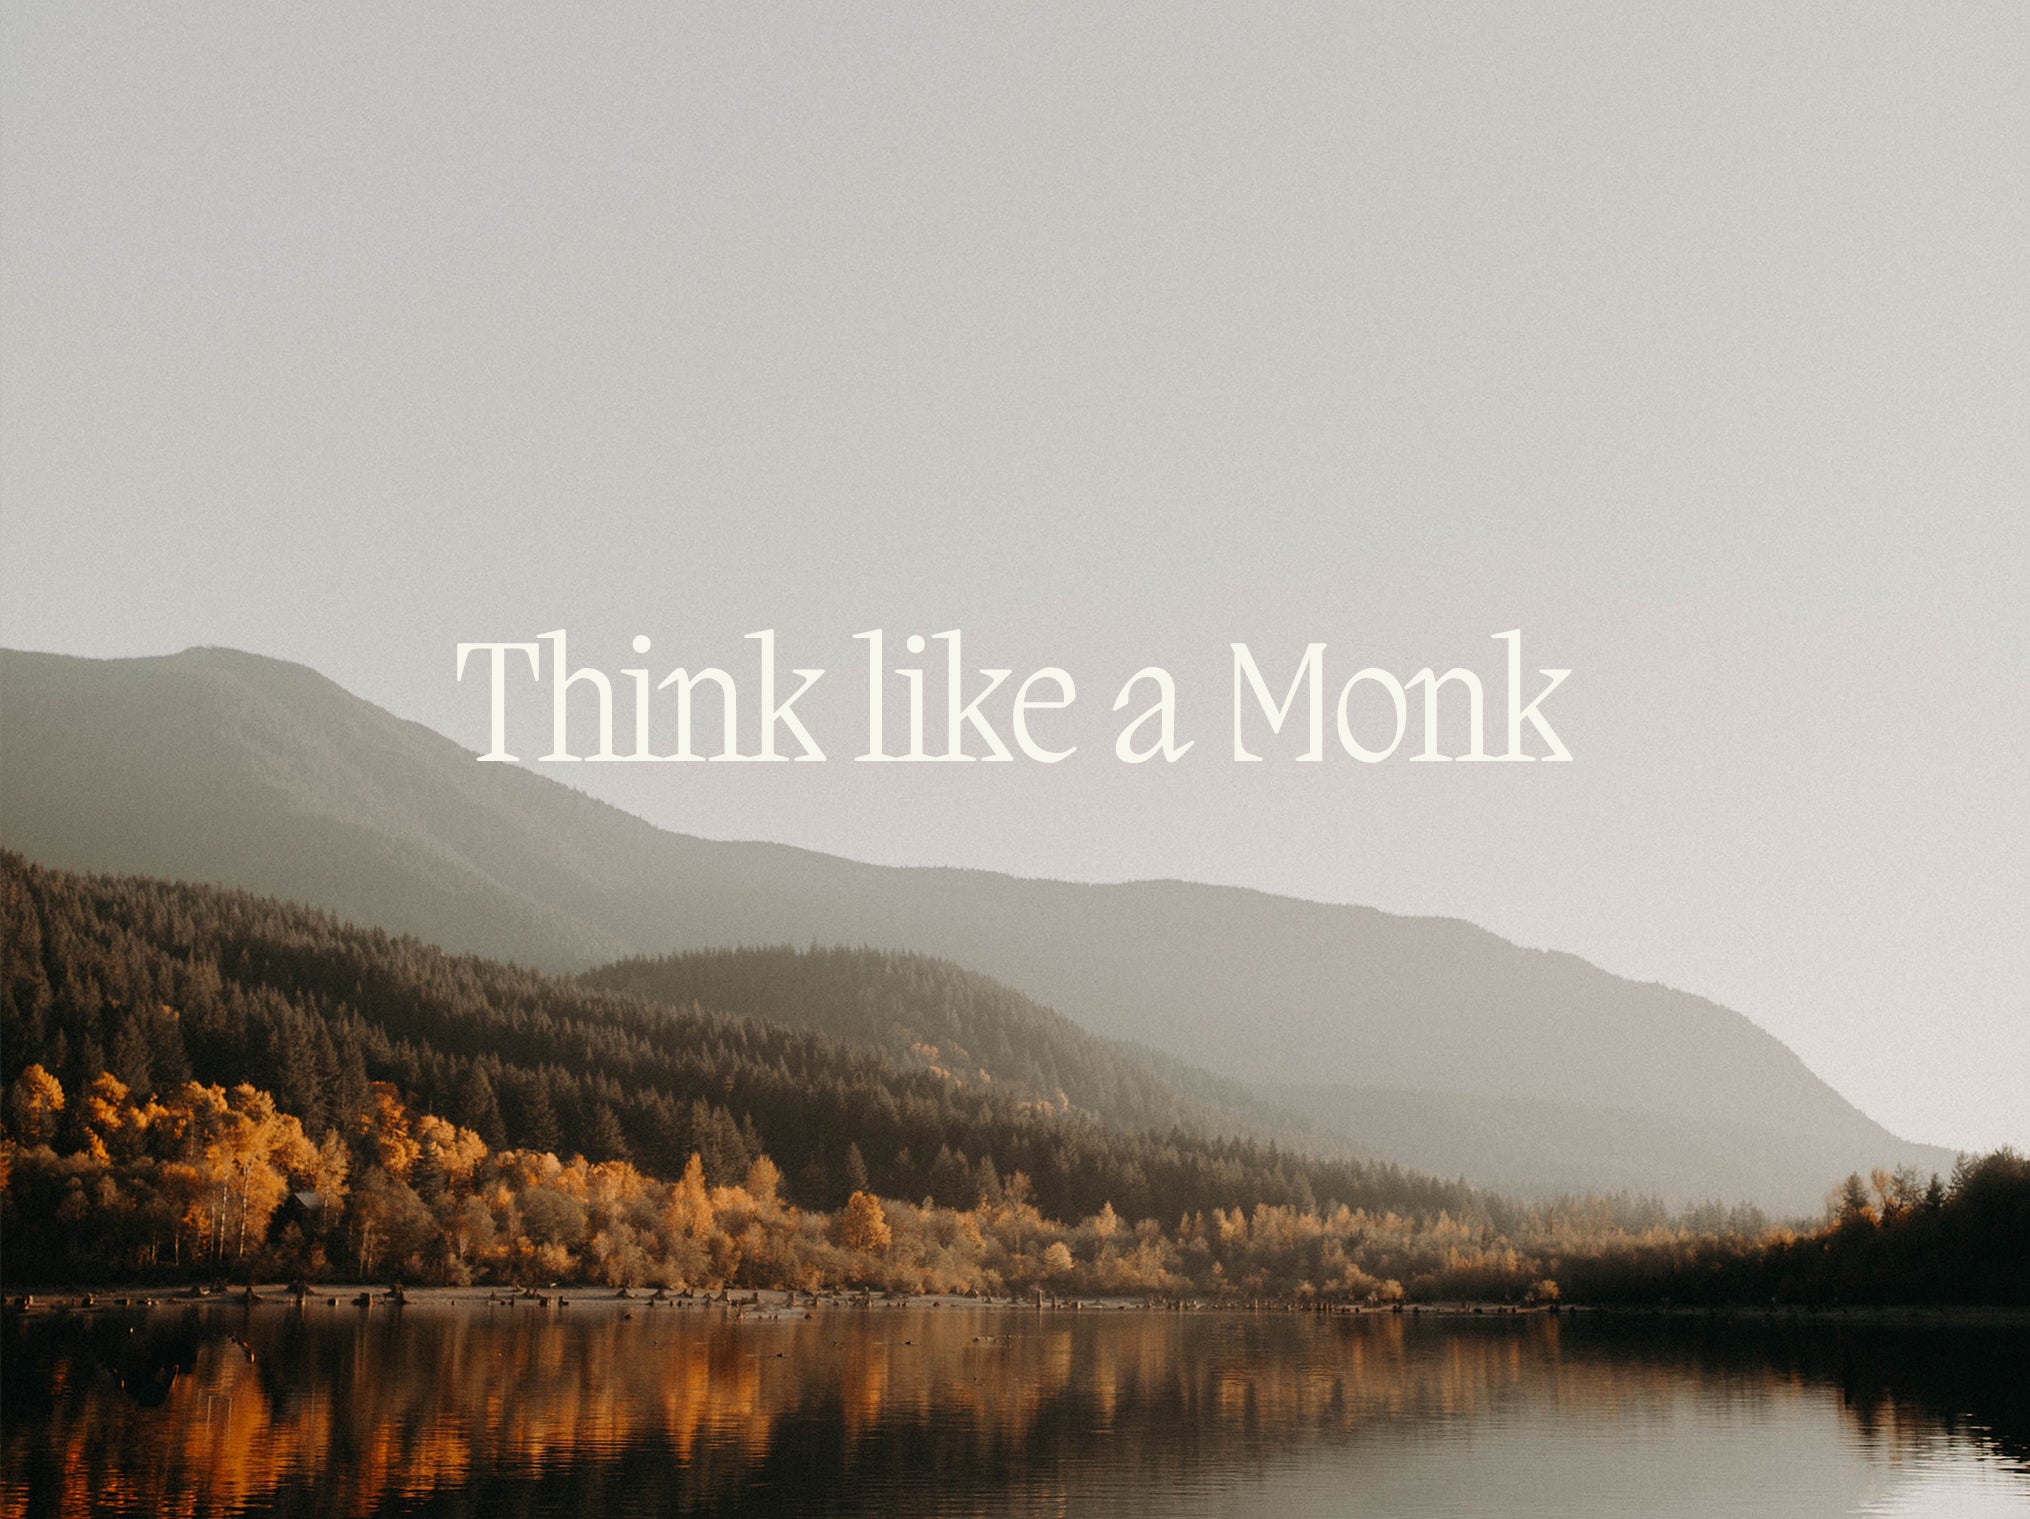 Load video: namoMonk think like a monk